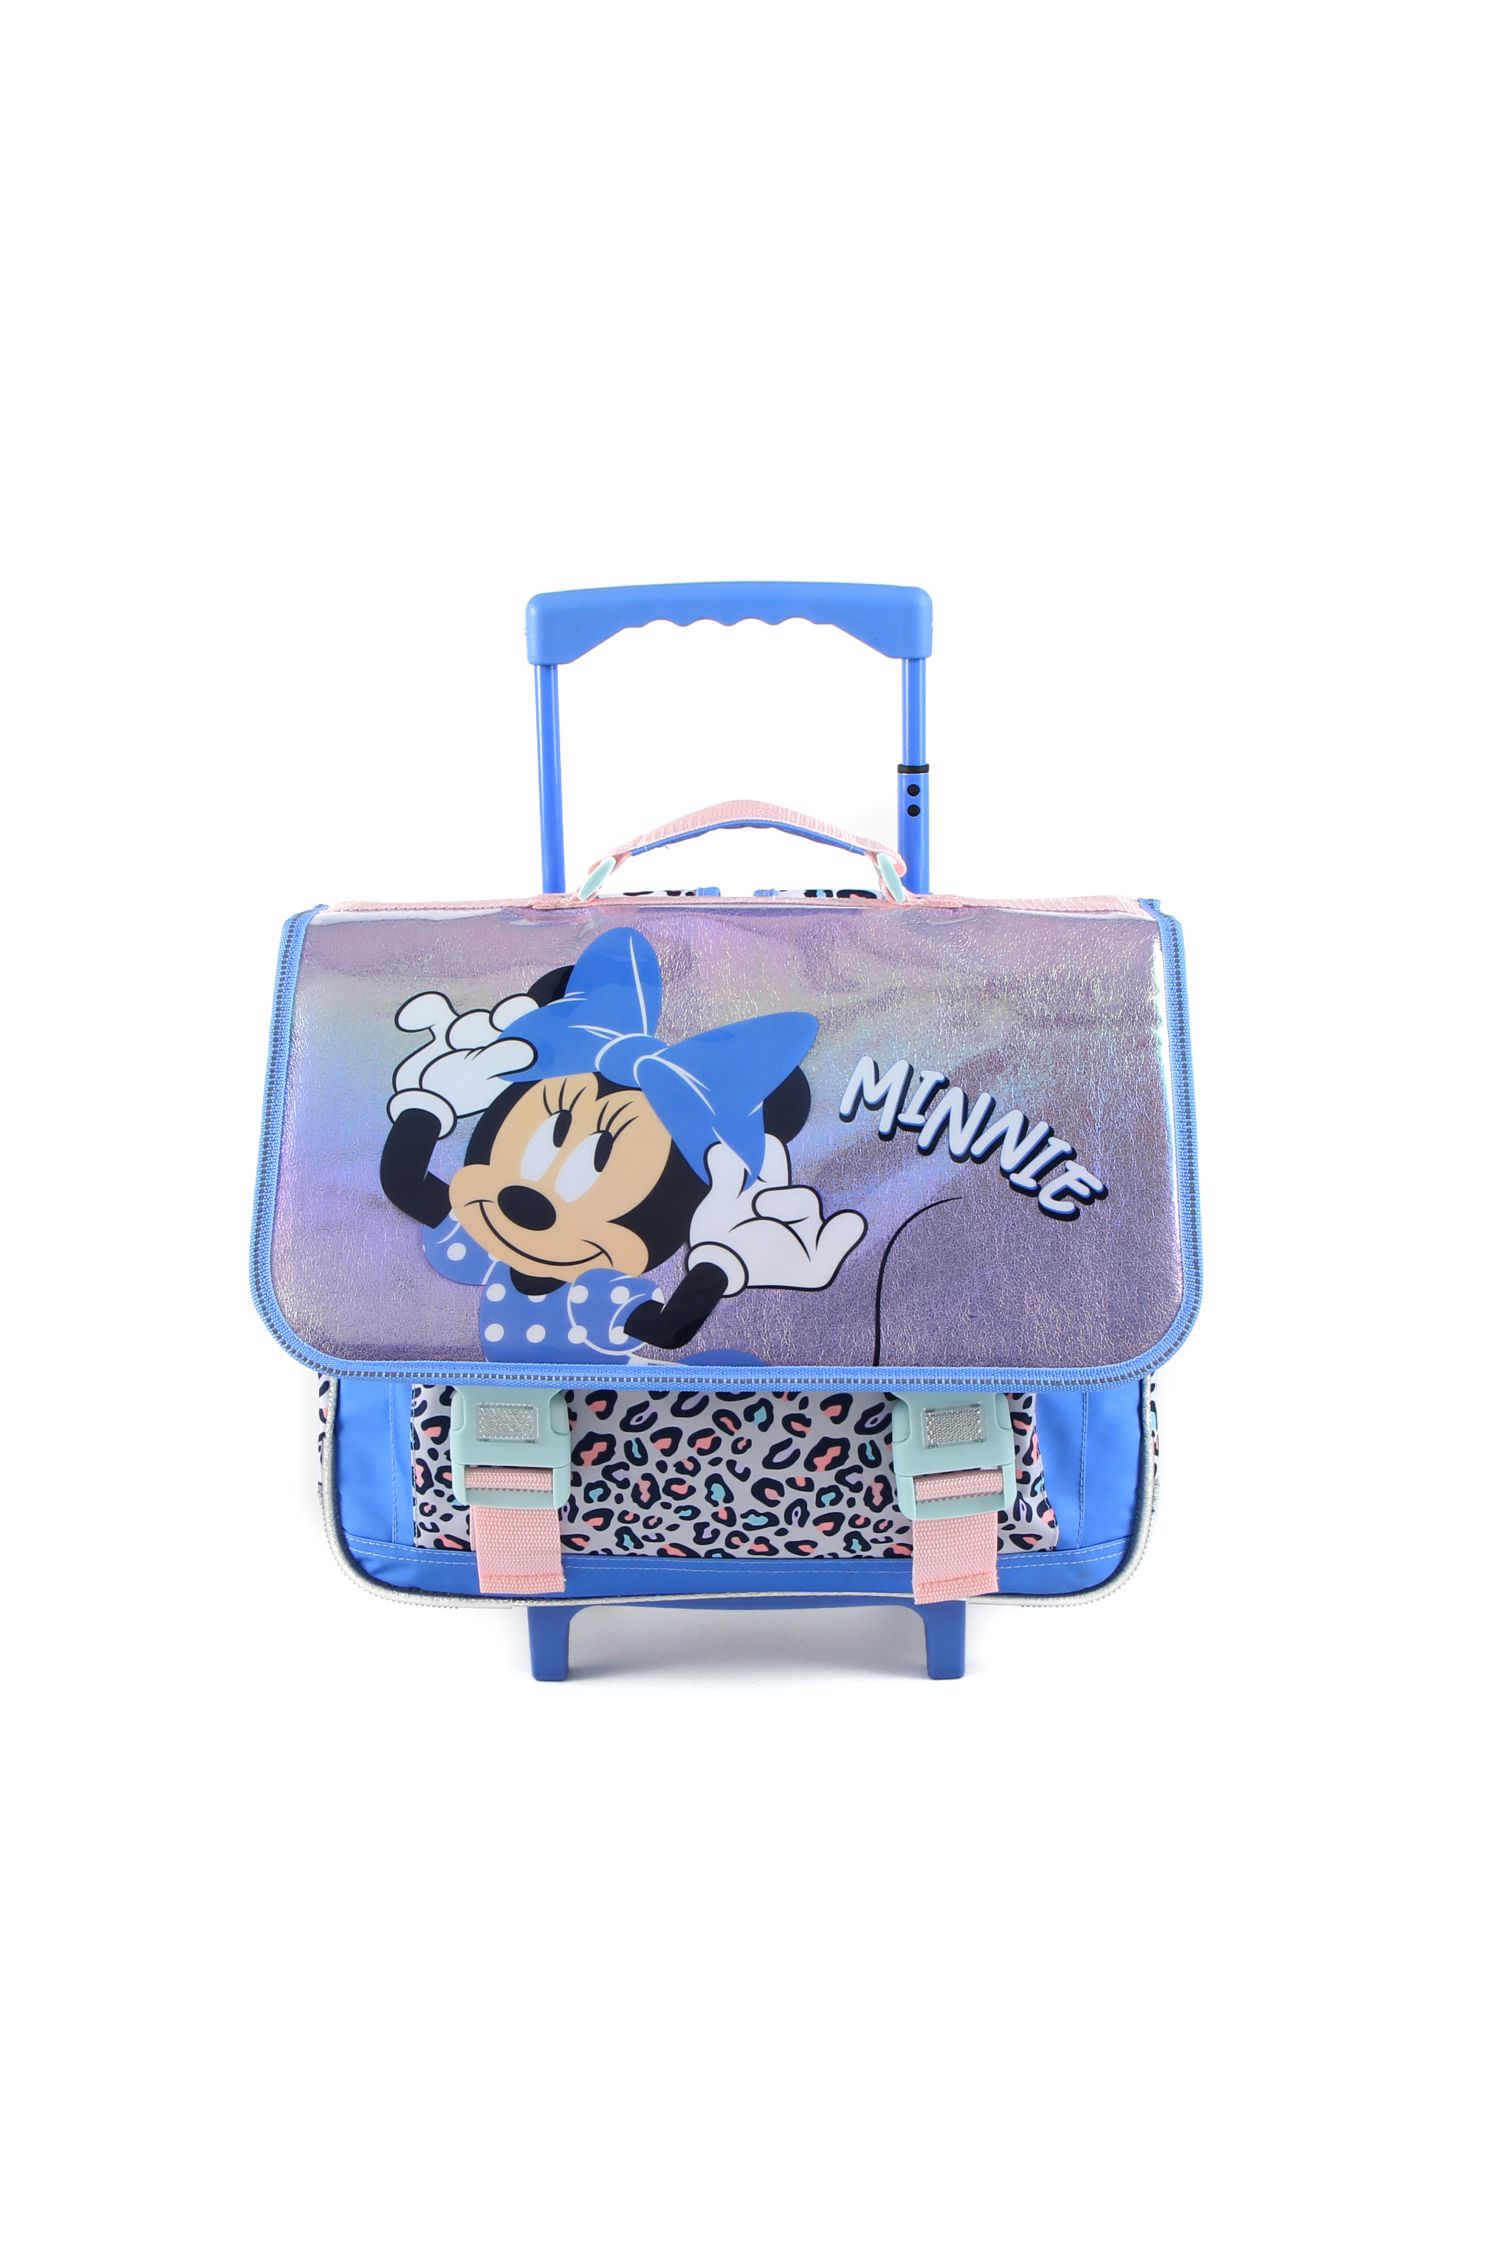 Рюкзак Disney Minnie Mouse Schulranzen Rädern Minnie Leopard 41cm Trolley, синий рюкзак disney minnie holding flowers mini